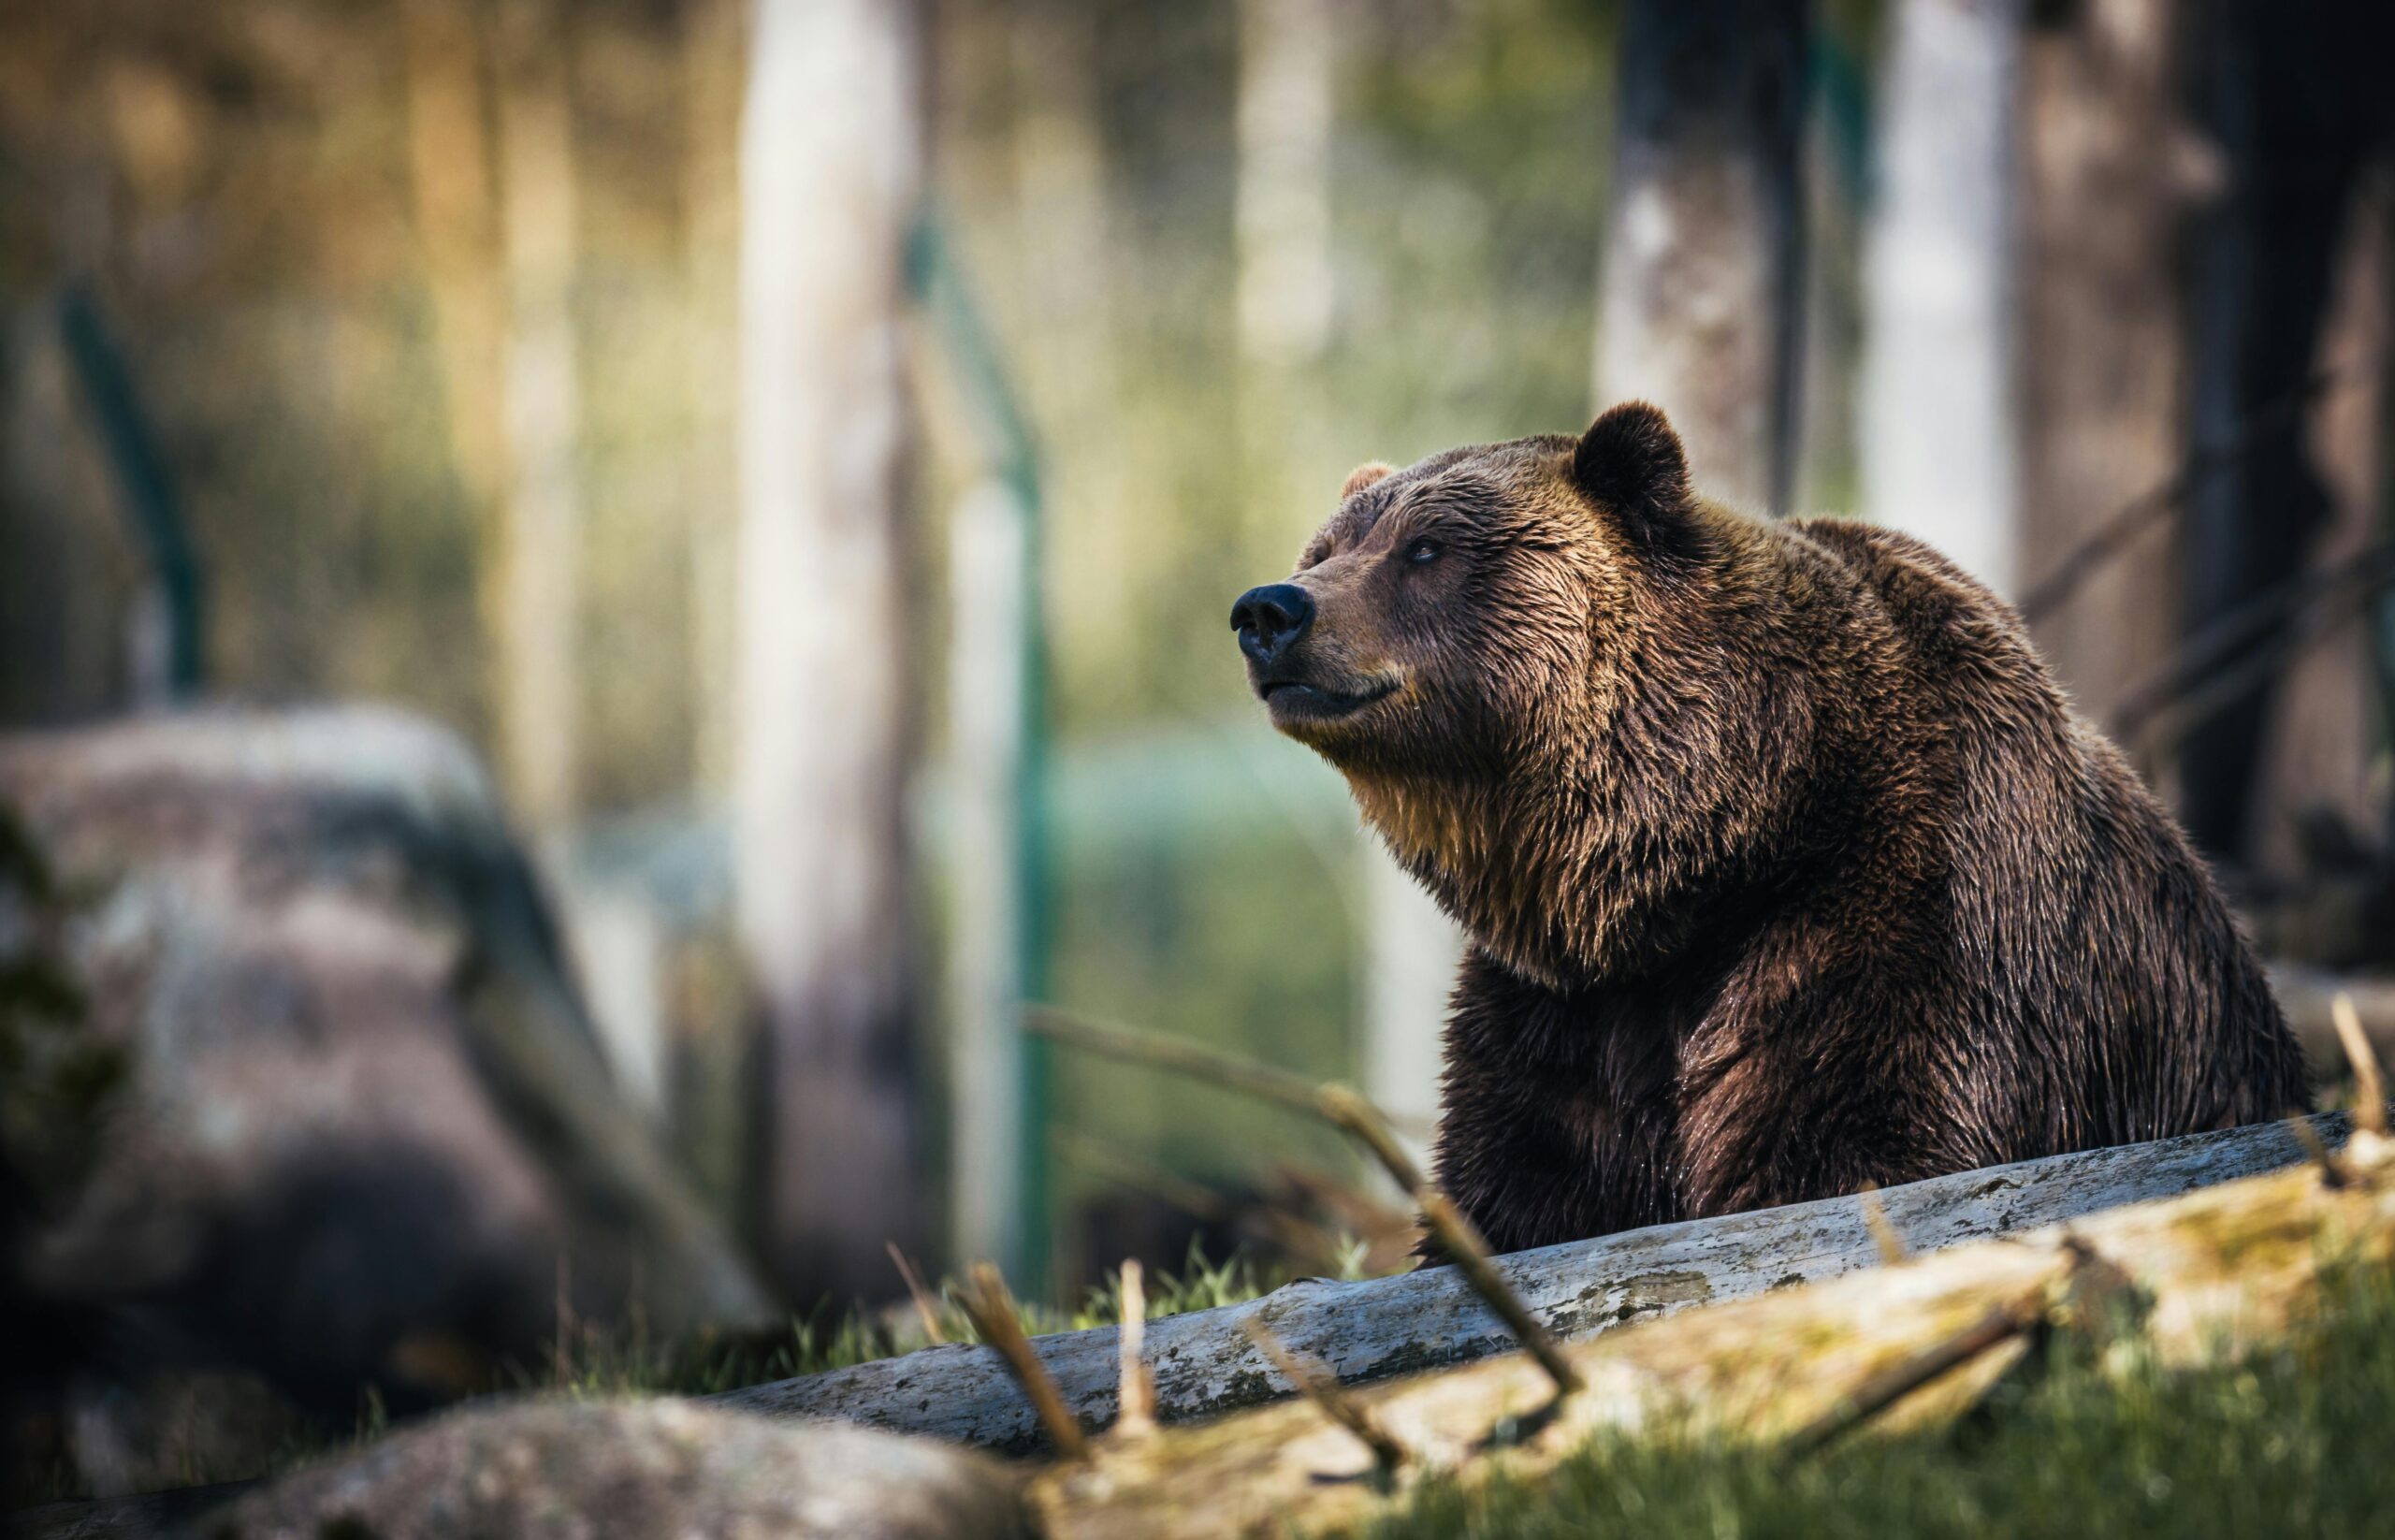 Implementan zona de prohibición de paradas debido a osos grizzly en el Parque Nacional Banff